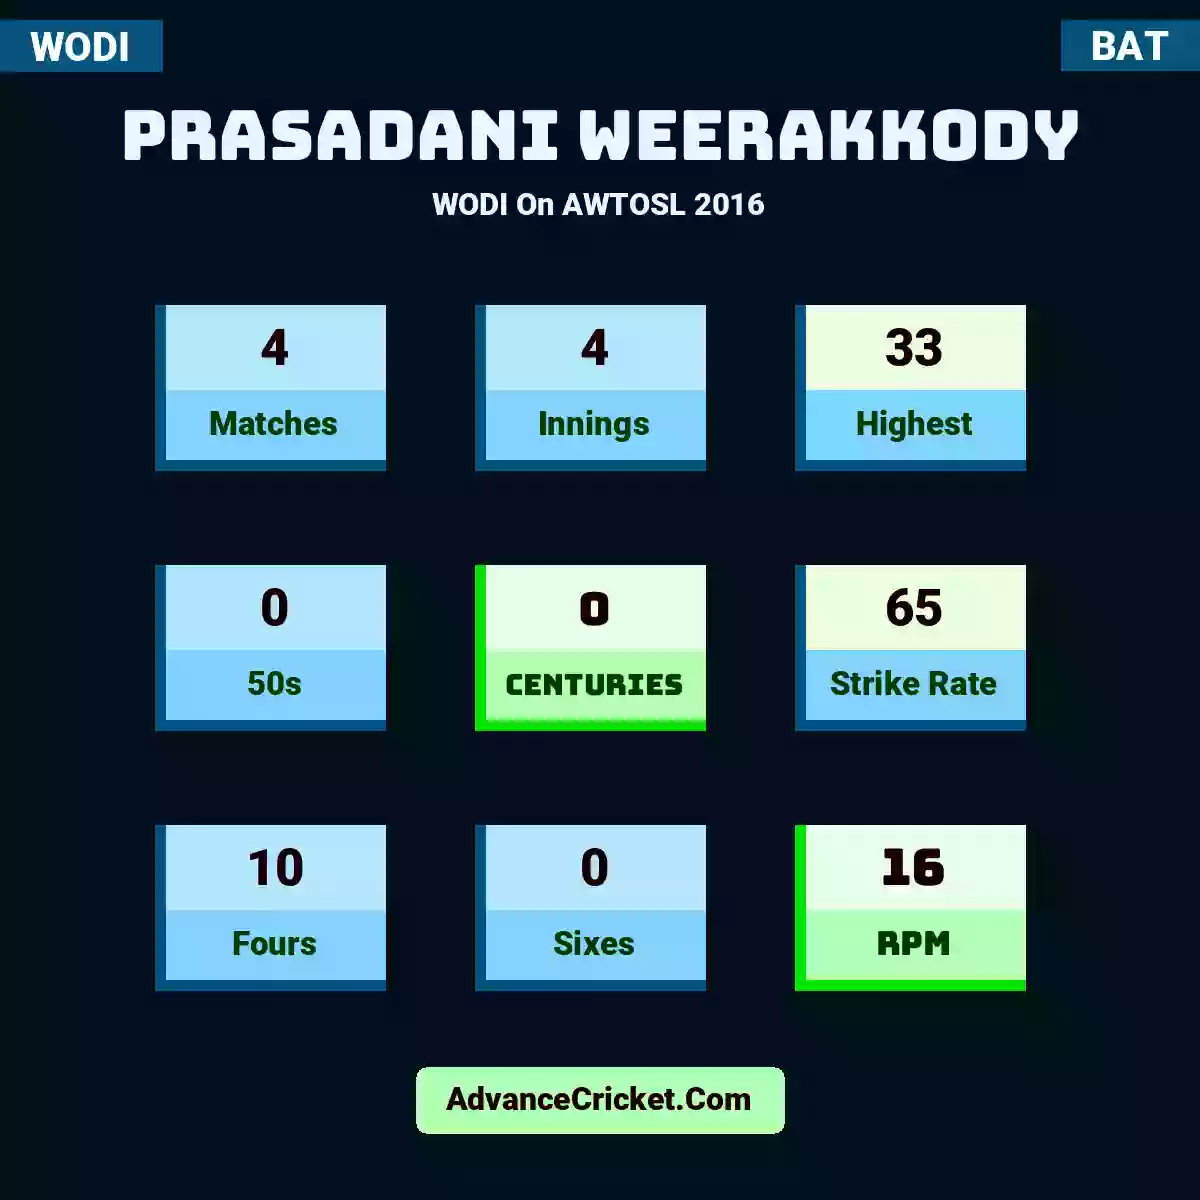 Prasadani Weerakkody WODI  On AWTOSL 2016, Prasadani Weerakkody played 4 matches, scored 33 runs as highest, 0 half-centuries, and 0 centuries, with a strike rate of 65. P.Weerakkody hit 10 fours and 0 sixes, with an RPM of 16.